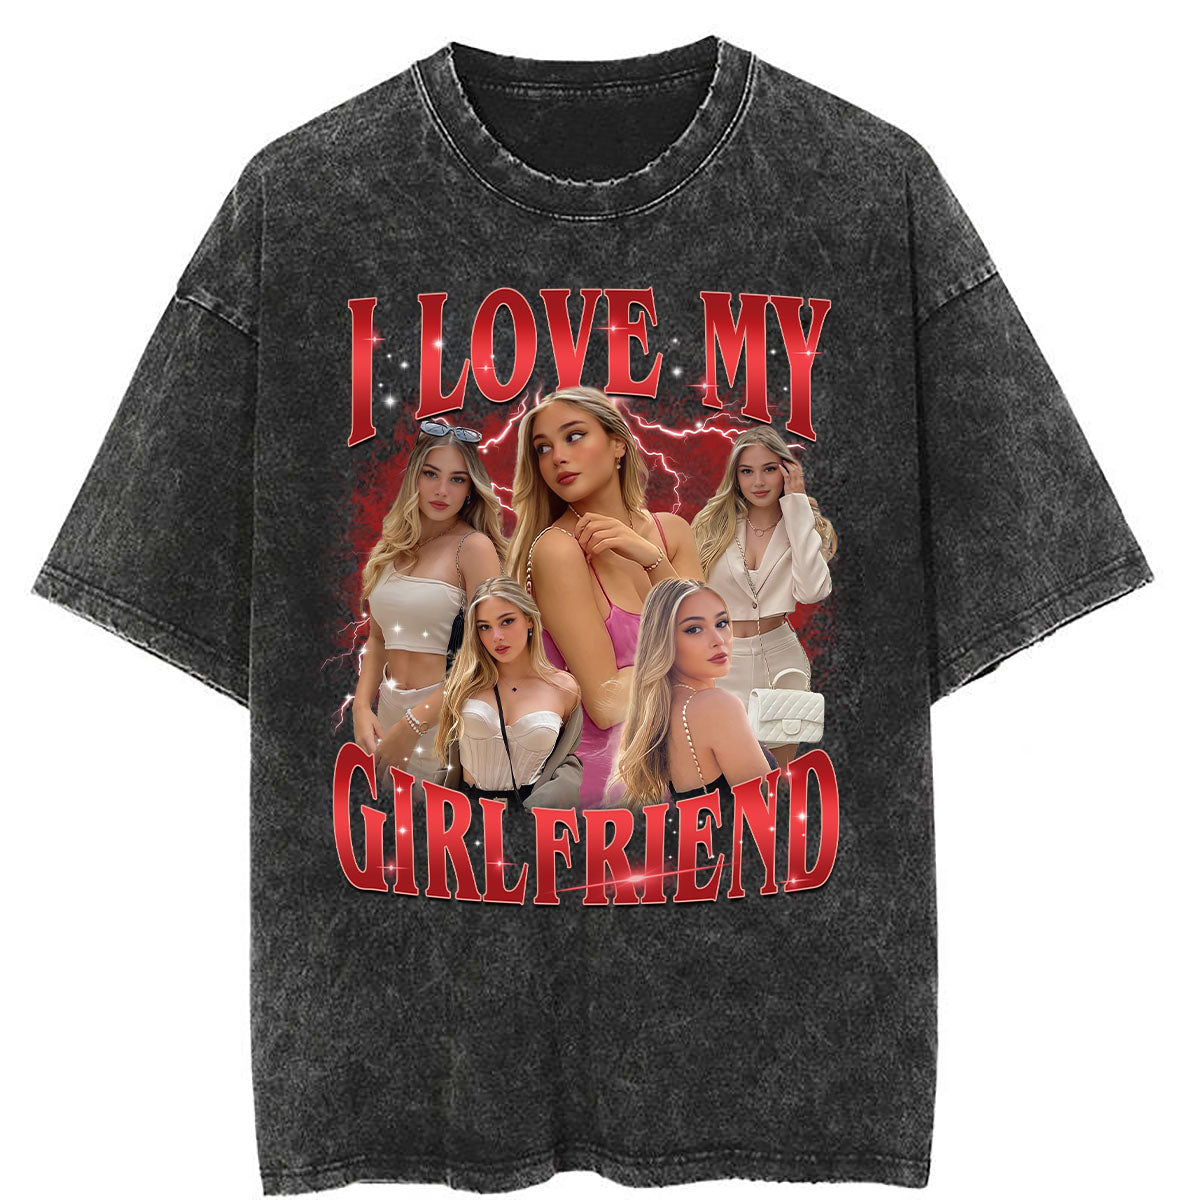 I Love You - Personalized Custom Bootleg T-shirt - Gift For Couple, Girlfriend, Boyfriend